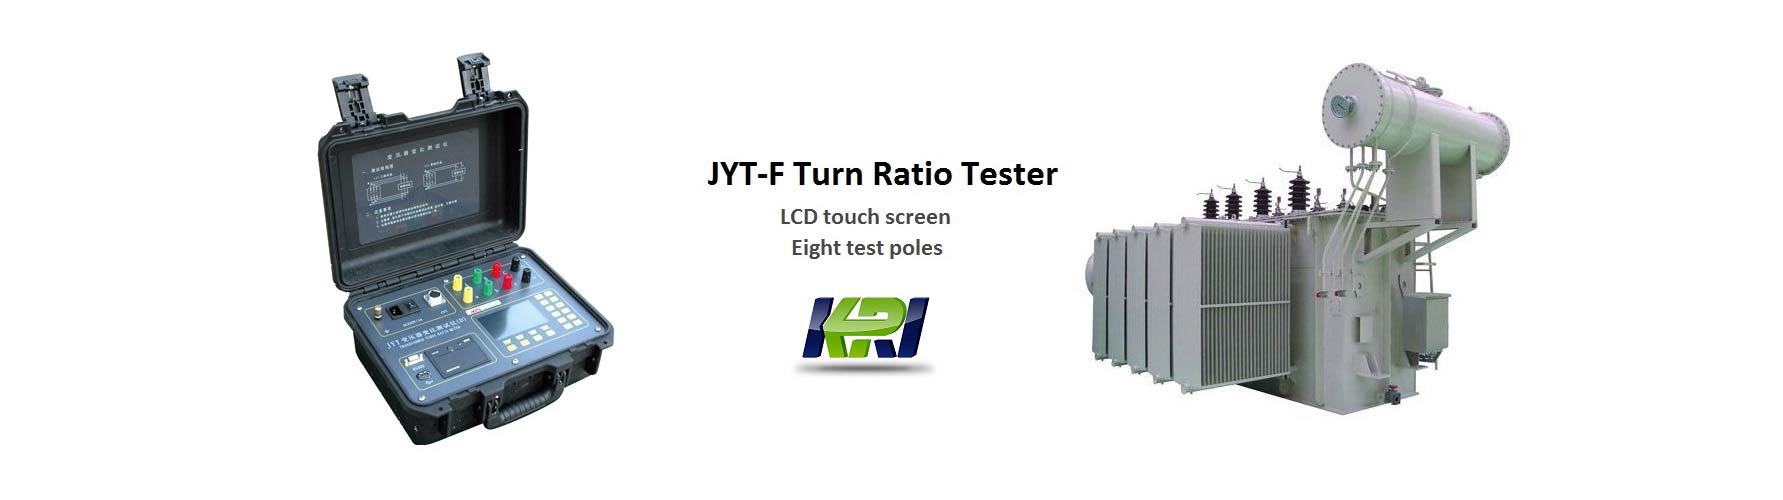 JYT-F turn ratio tester